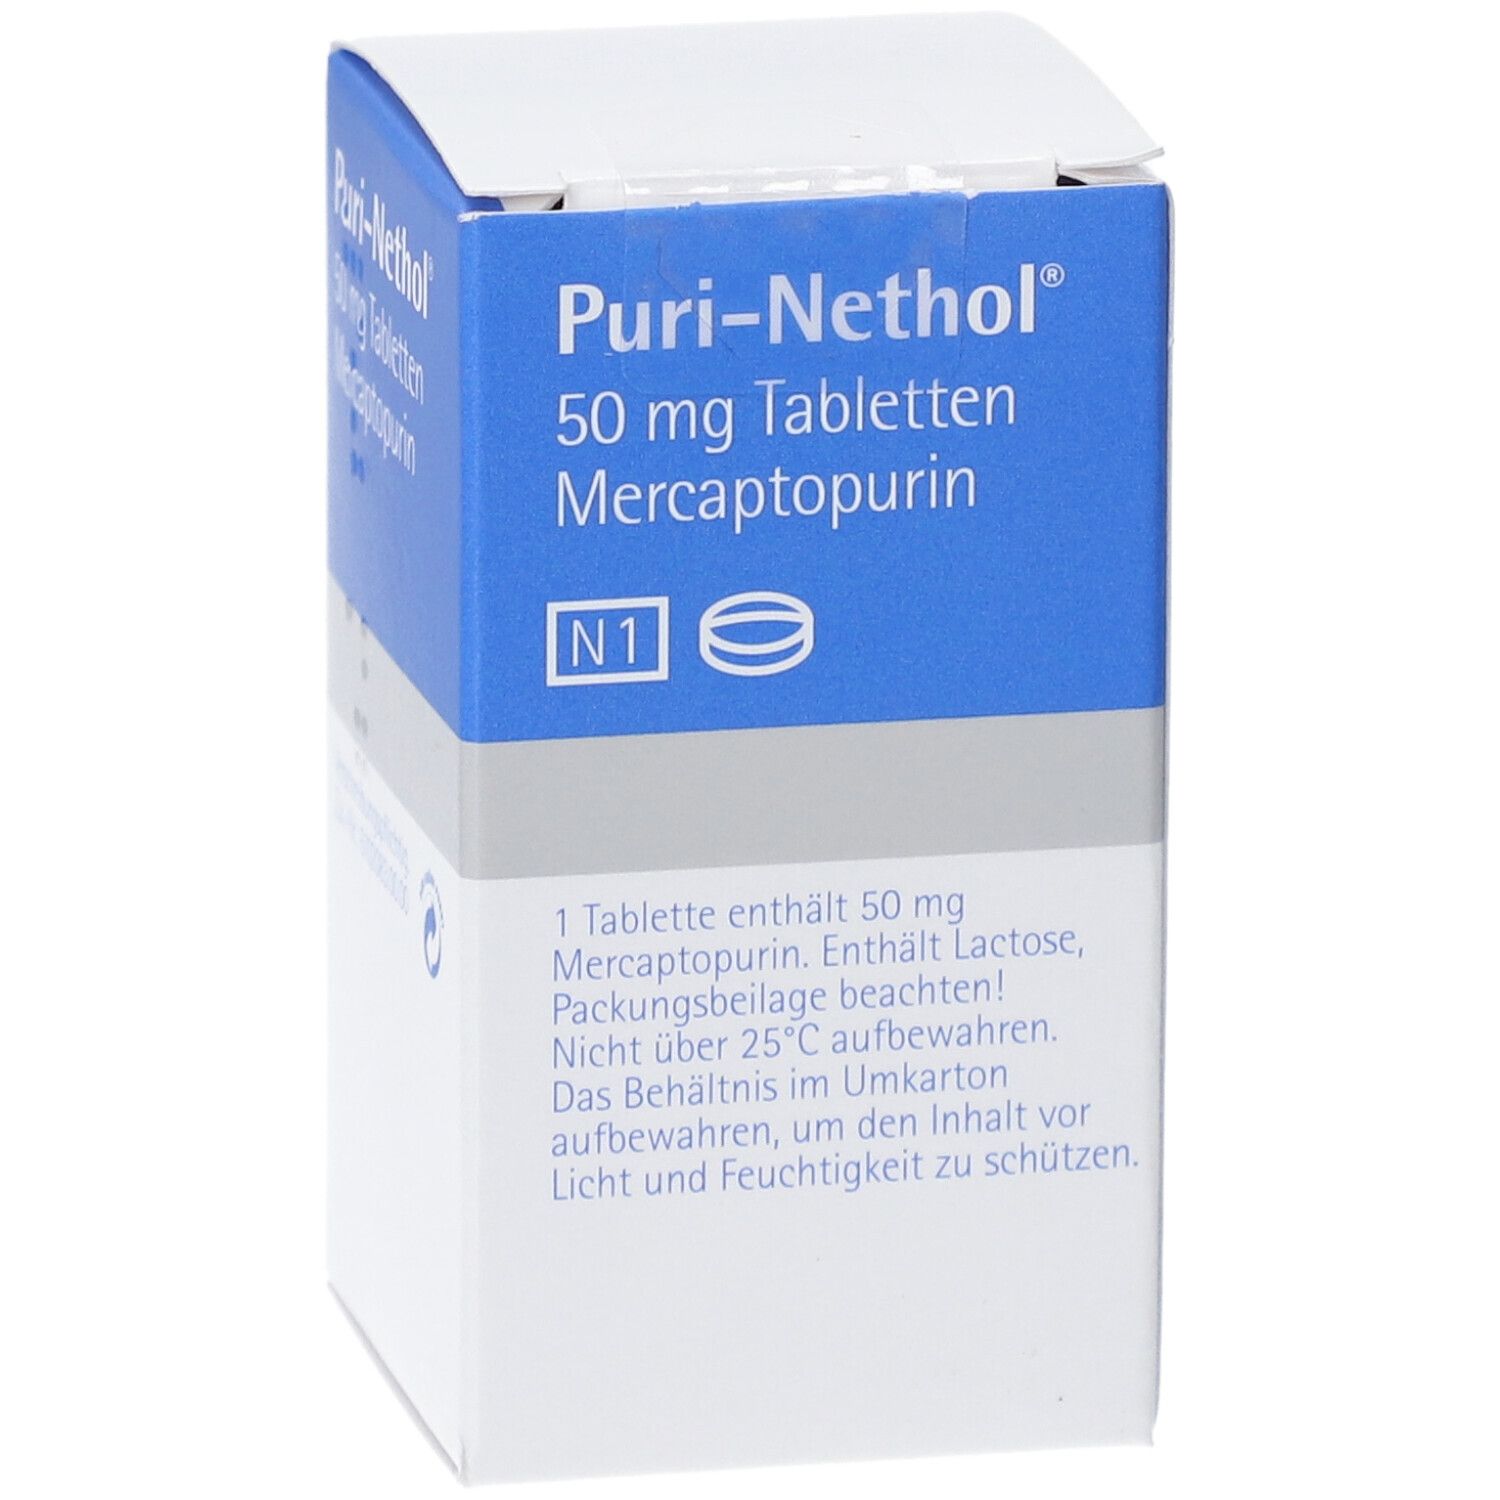 Puri-Nethol® 50 mg